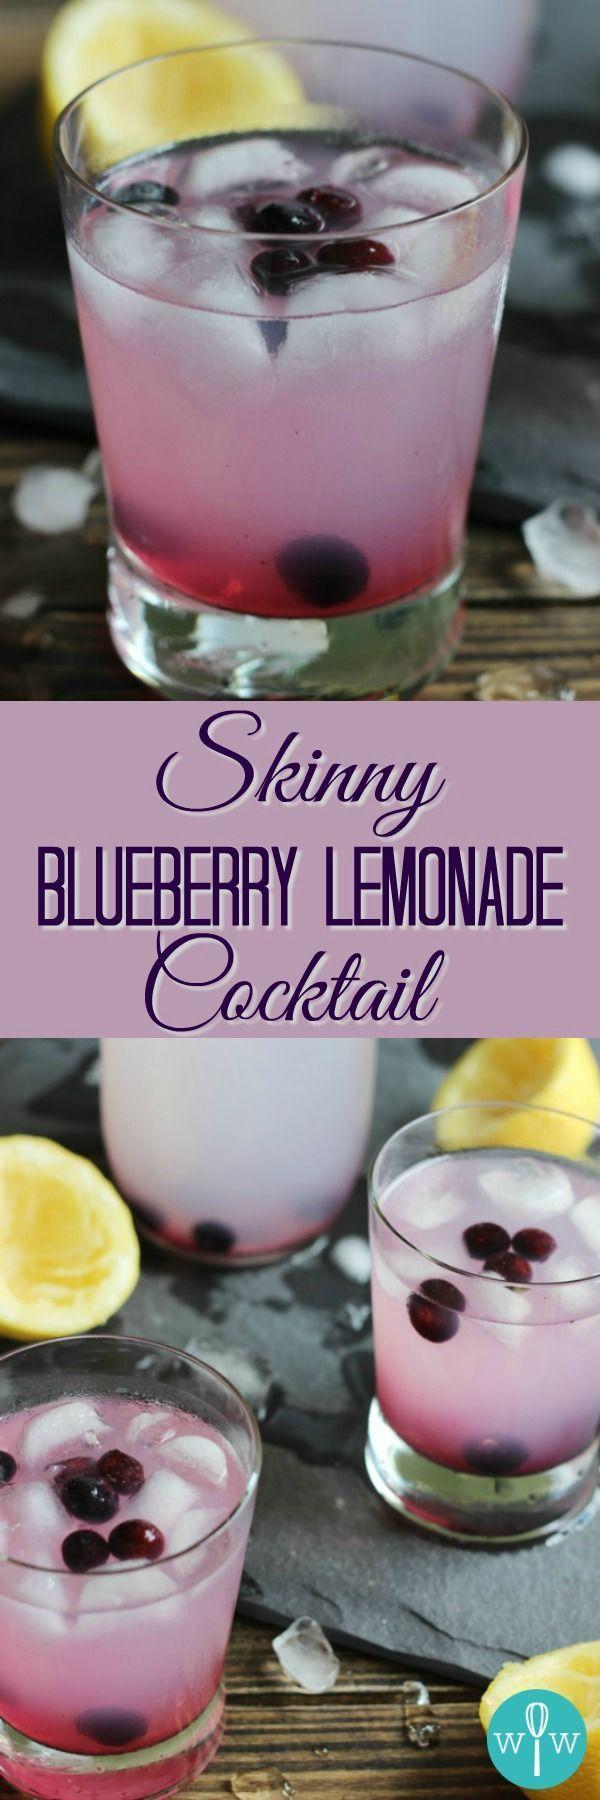 Свадьба - "Skinny" Blueberry Lemonade Cocktail